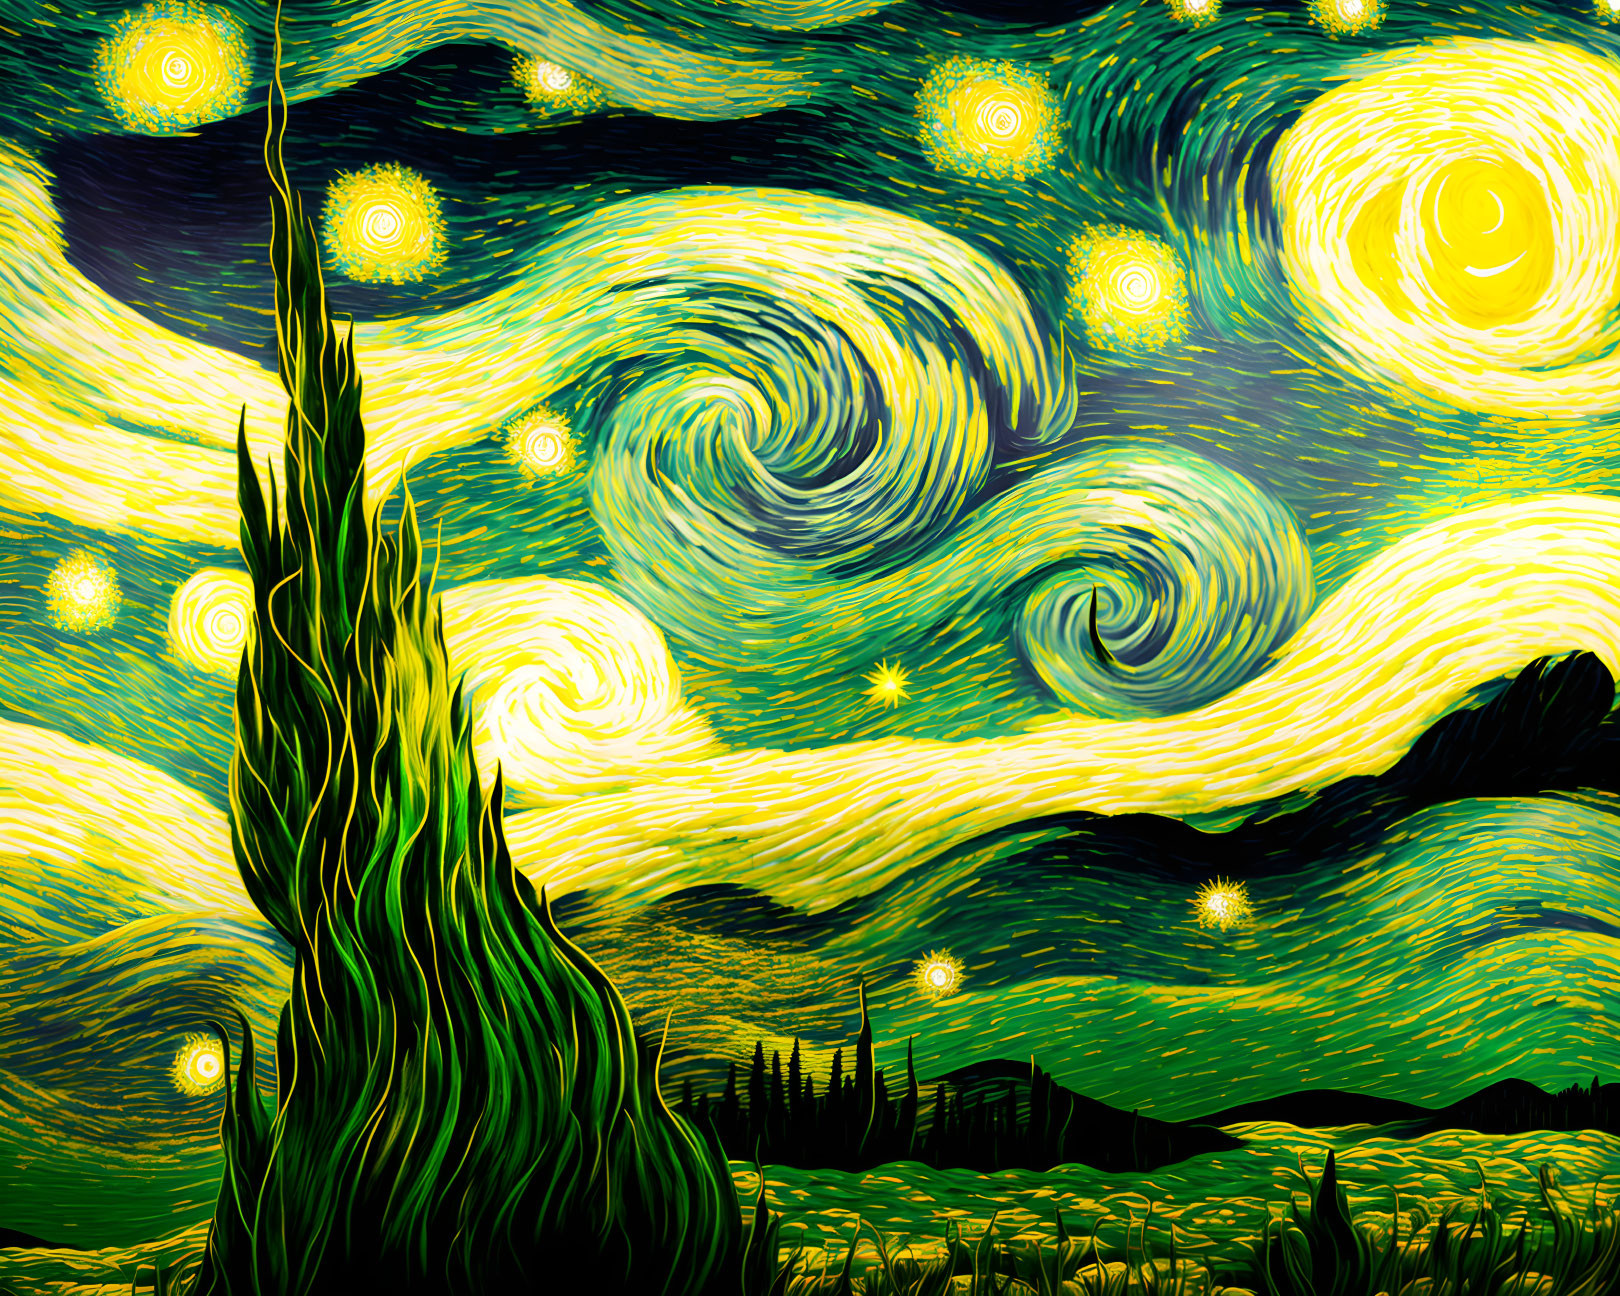 Swirling skies, bright stars, cypress tree - reminiscent of "Starry Night